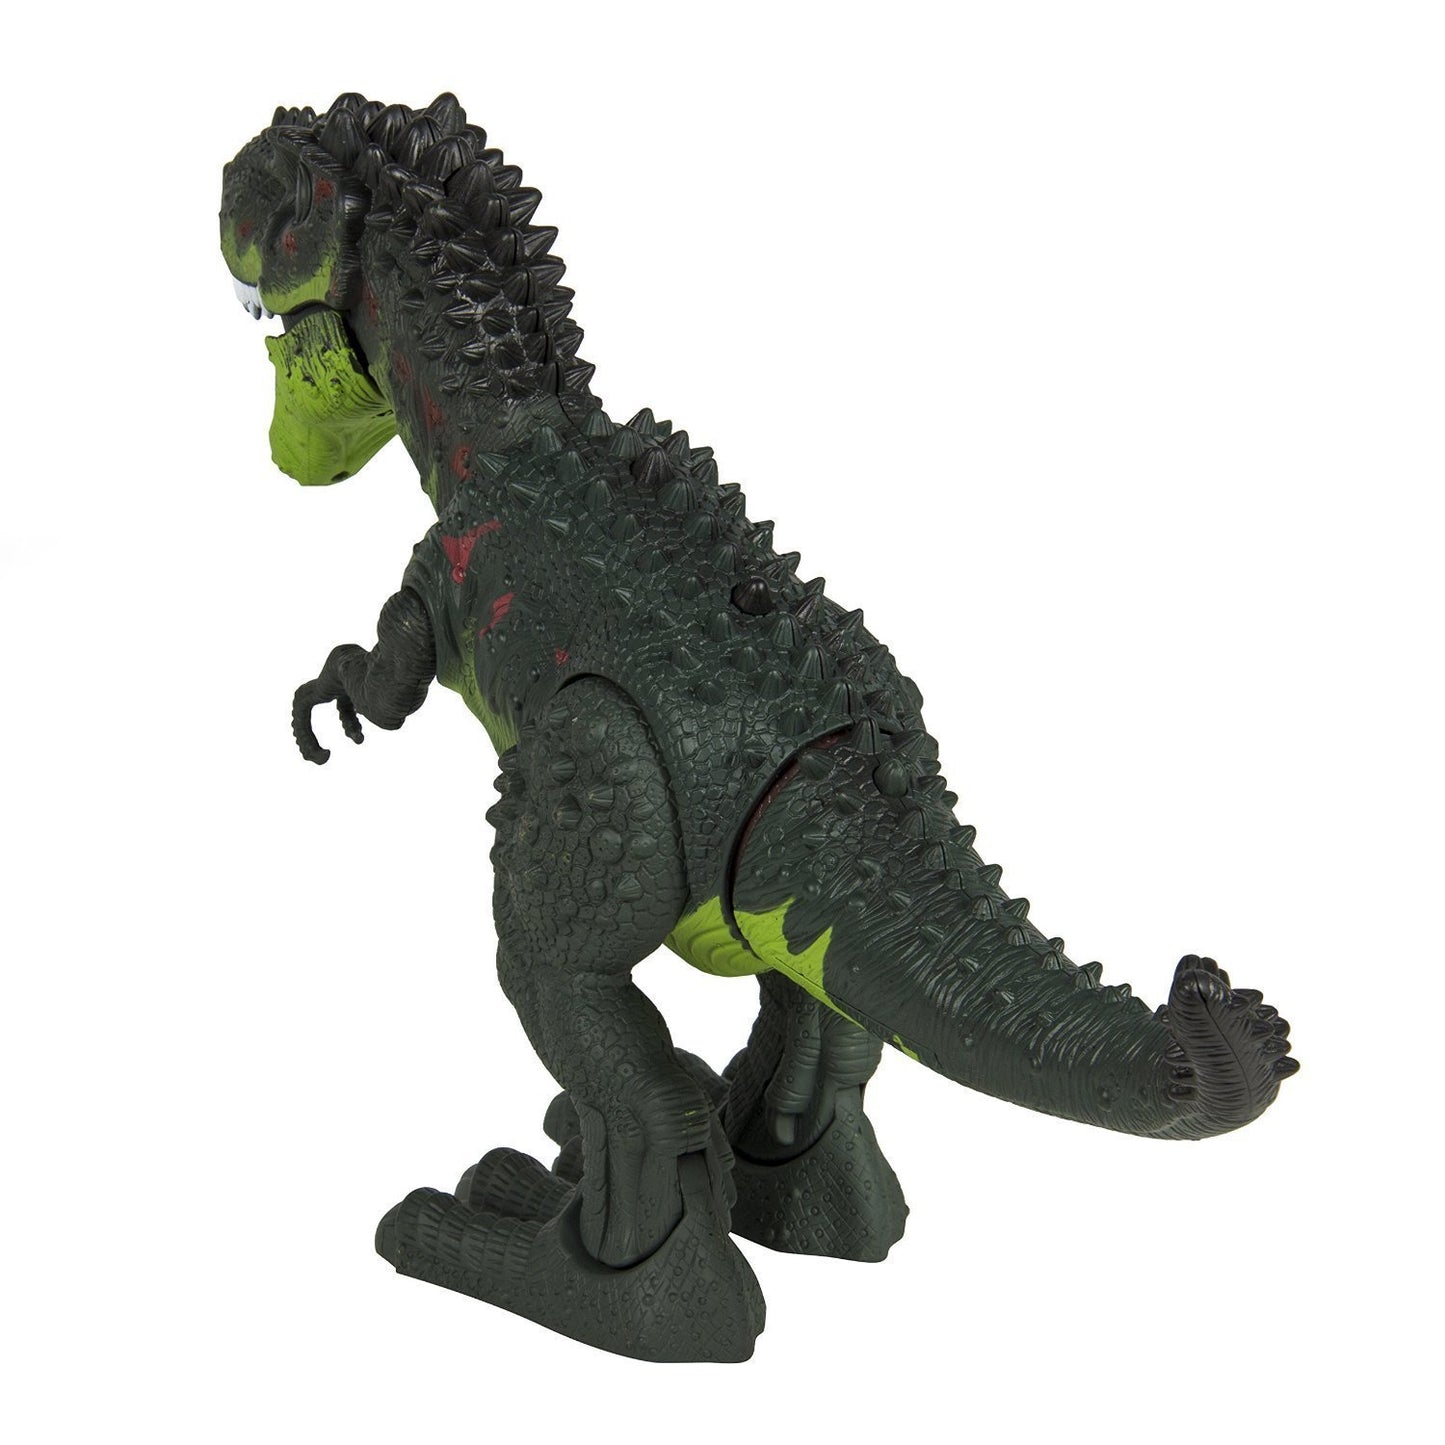 Toys Furious T Rex Moving Dinosaur Battery Powered Jurassic Era Prehistoric Life Like TREX